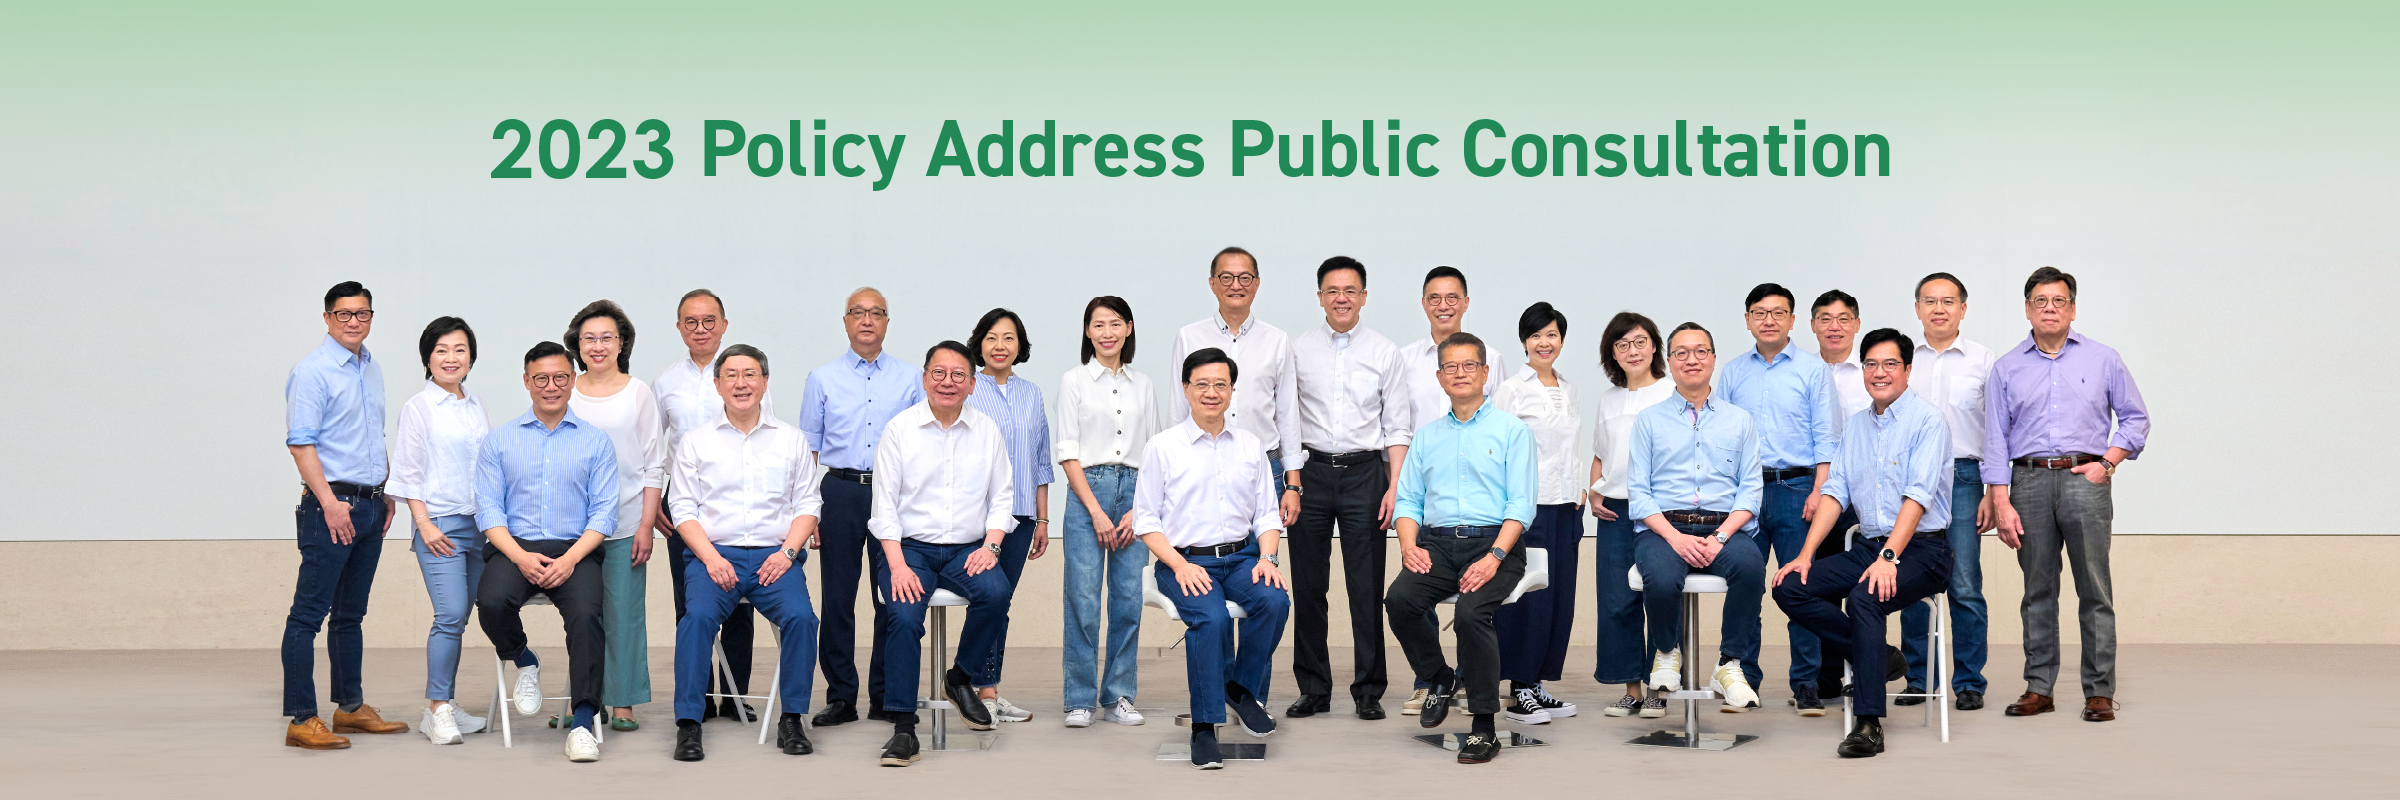 2023 Policy Address Public Consultation